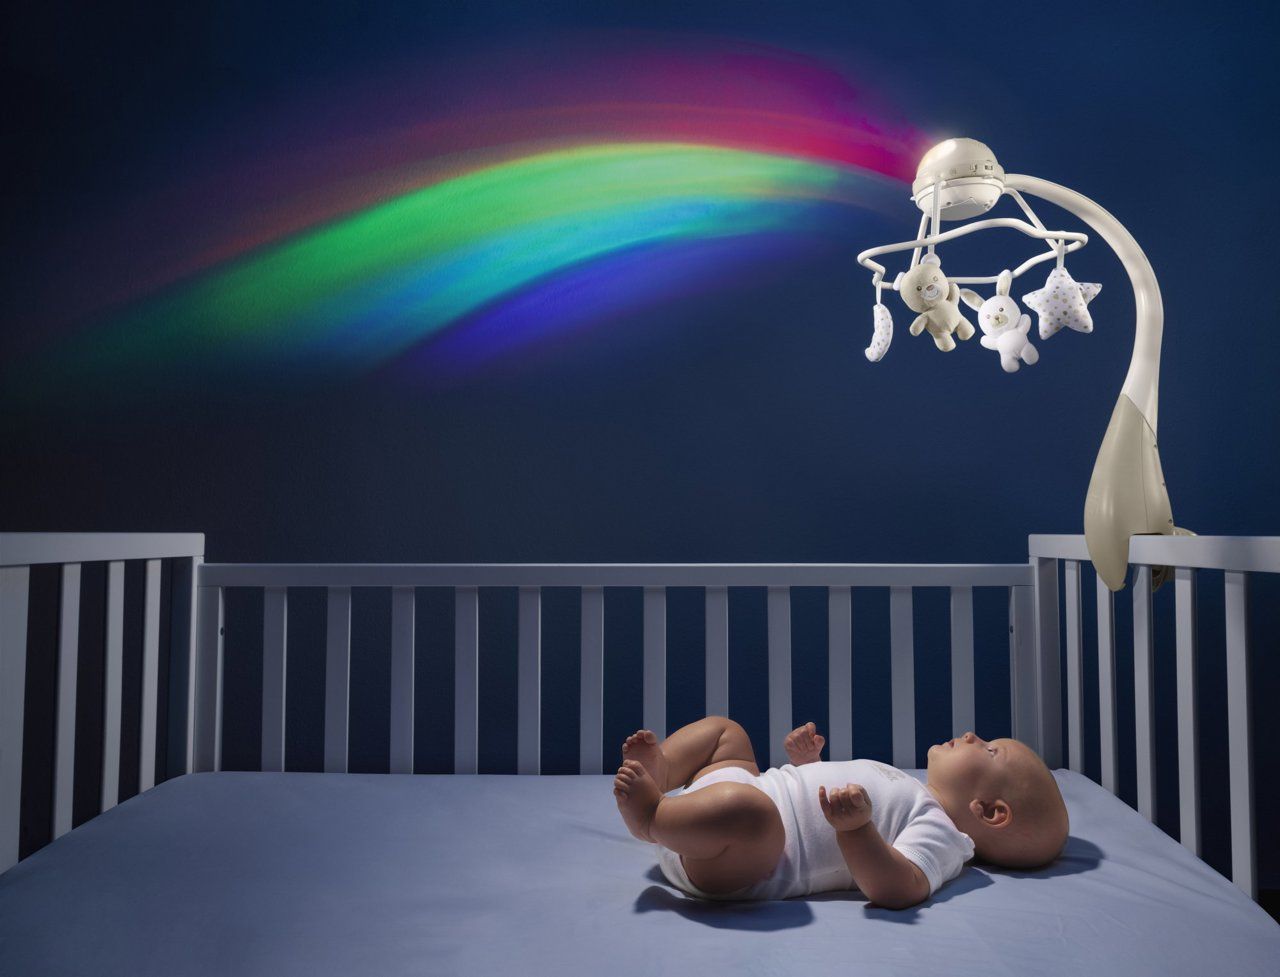 Carrusel Musical Cuna Rainbow Beige Chicco - Ares Baby, todo para tu bebé